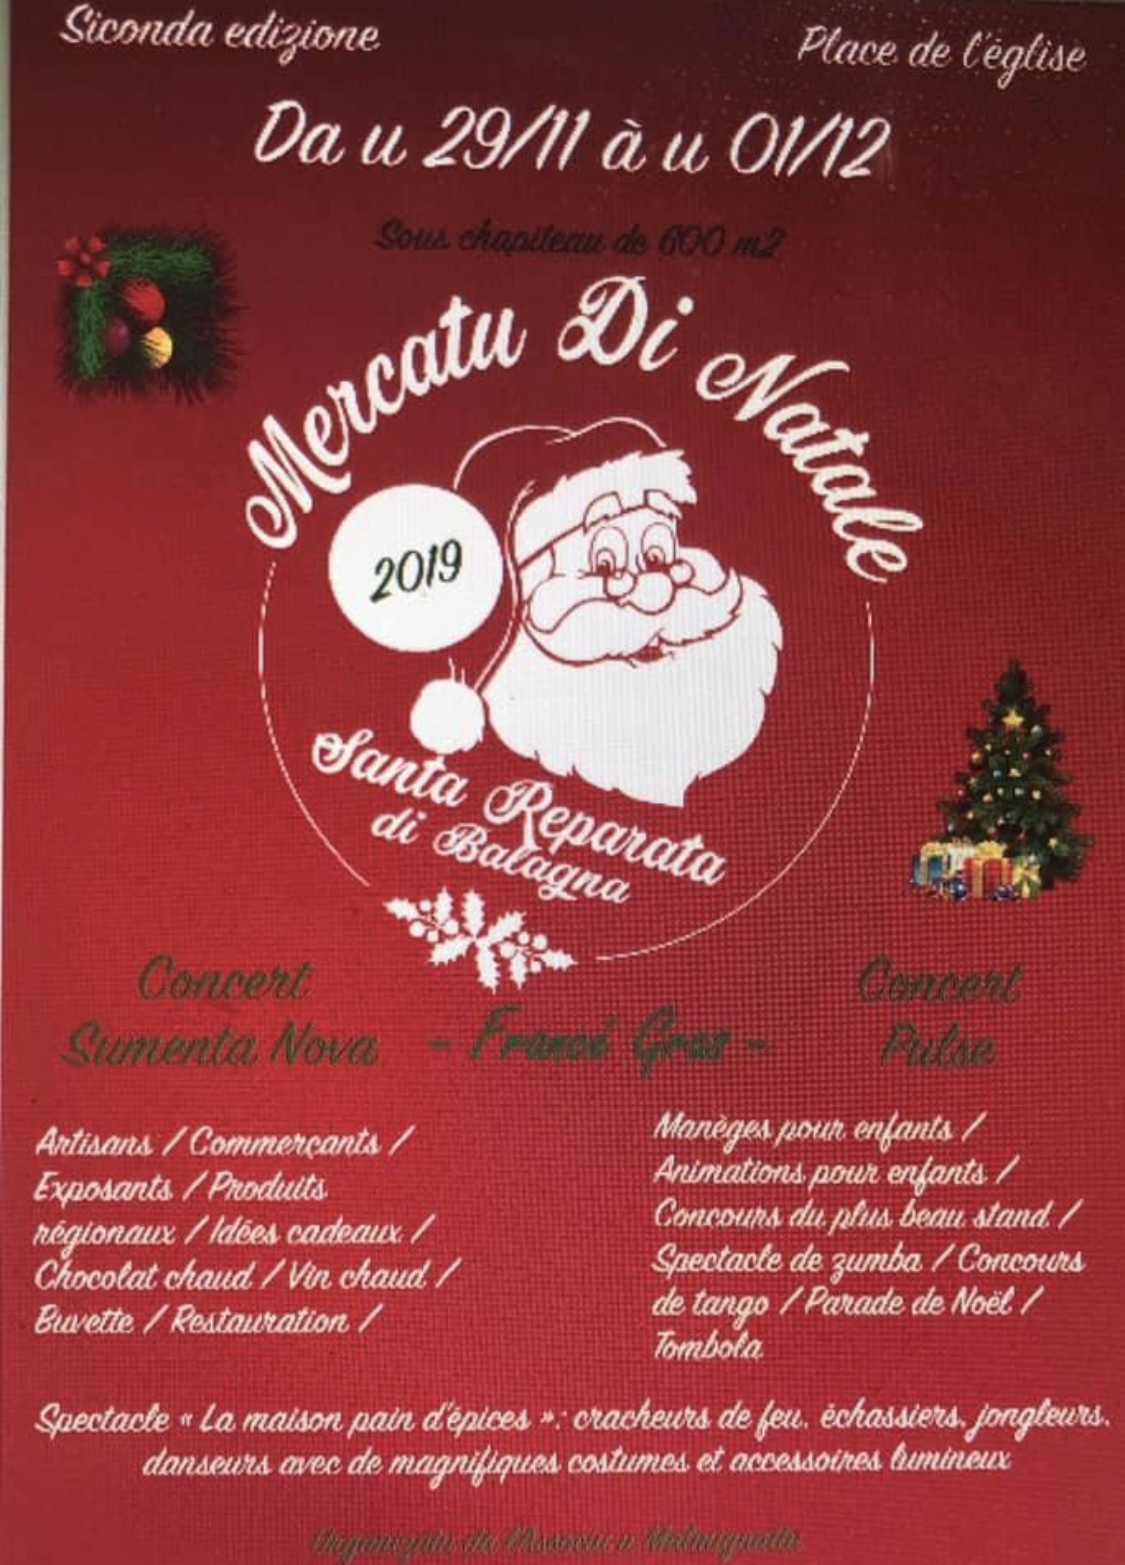 Le marché de Noël de Santa-Reparata-di-Balagna commence ce vendredi  